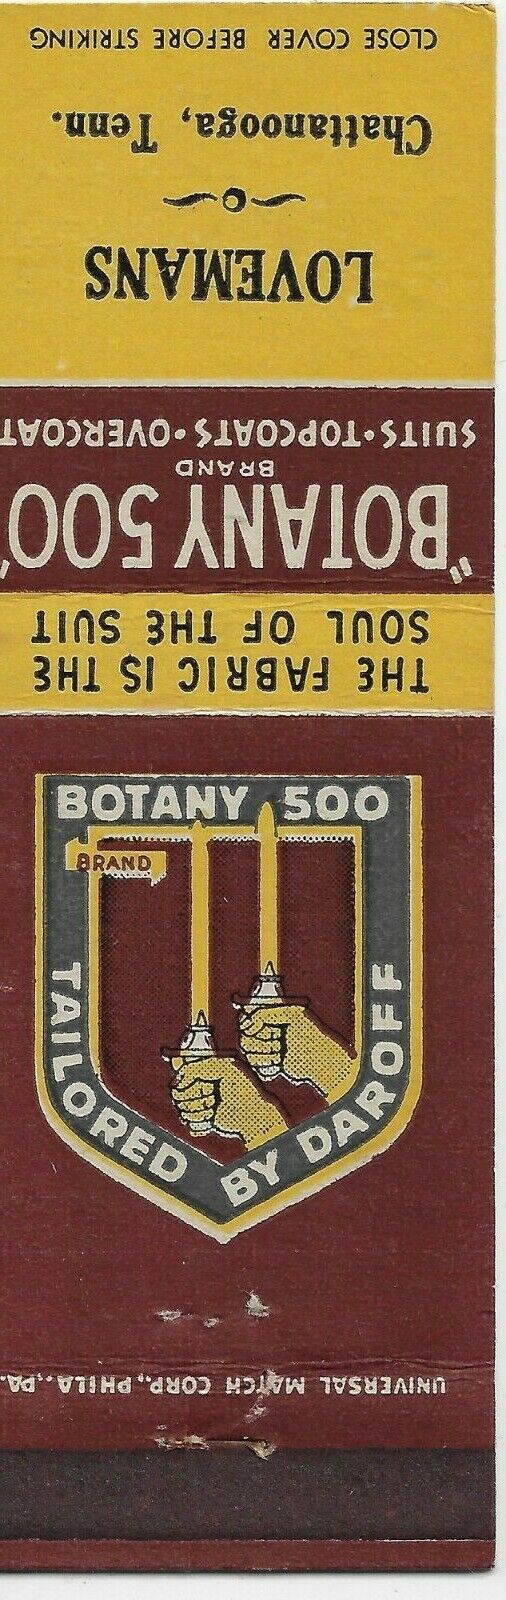 Botany 500 Suits Lovemans Chattanooga Tenn. Empty Matchcover